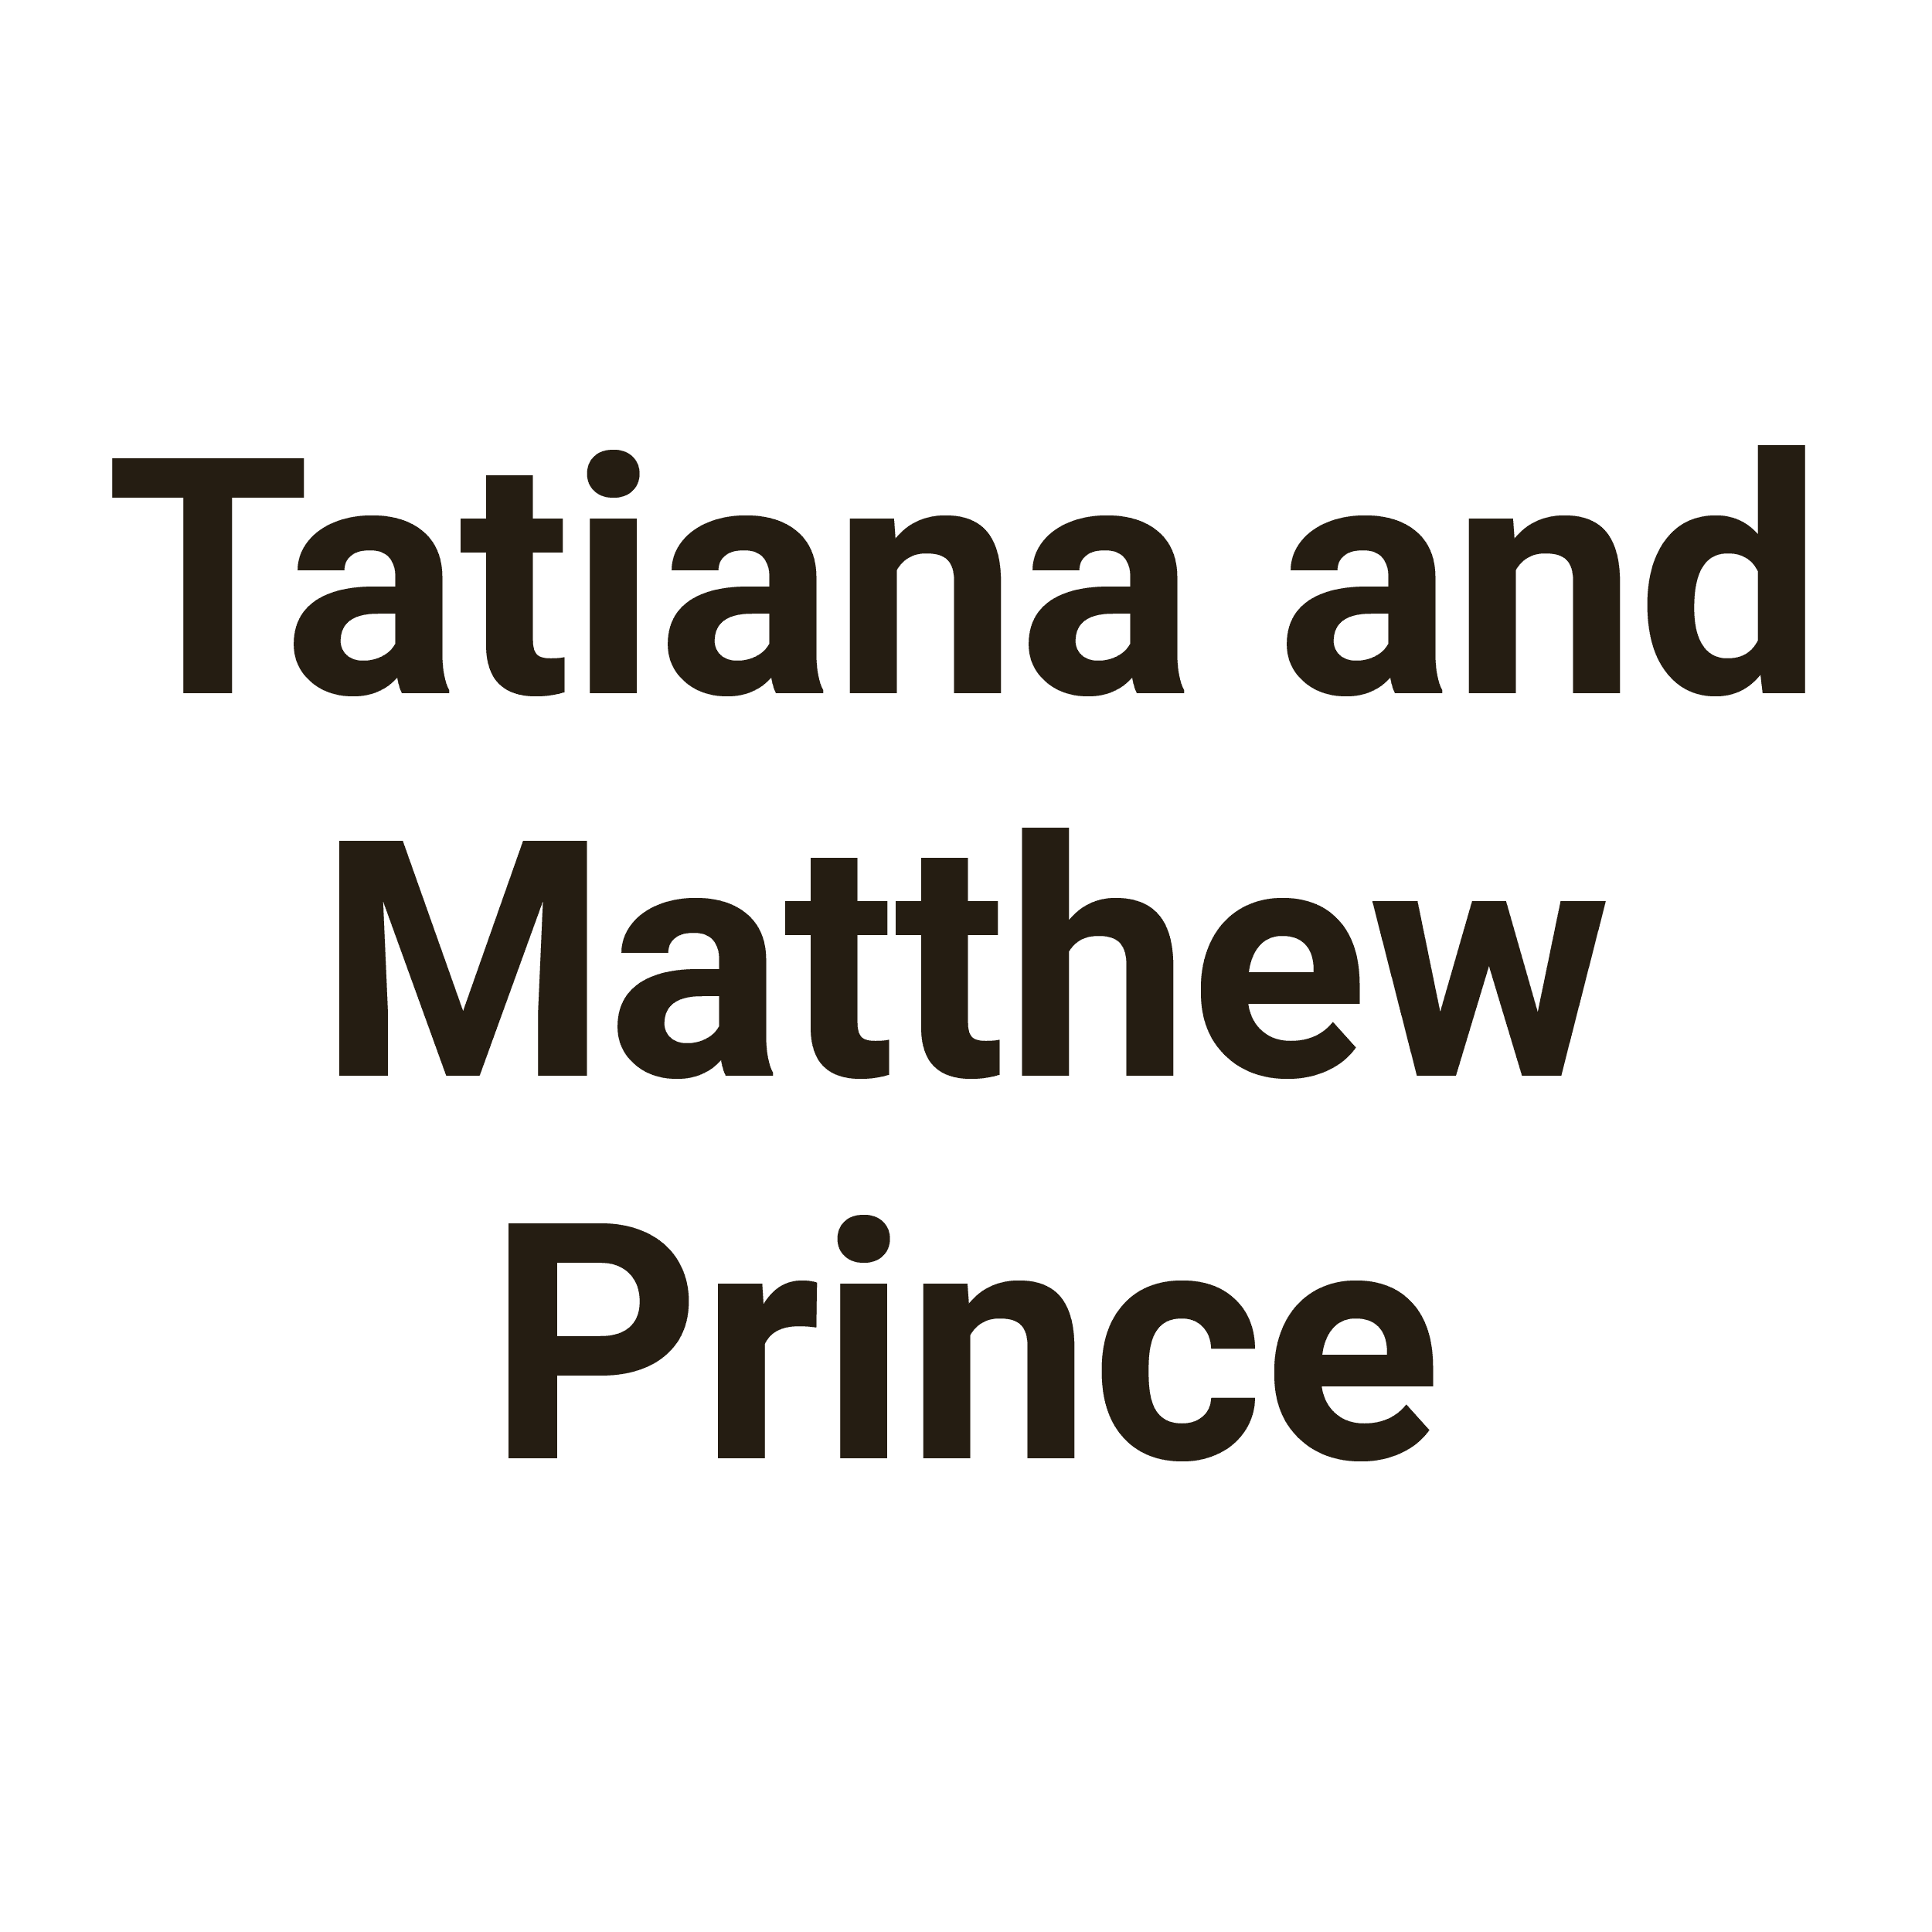 Tatiana and Matthew Prince